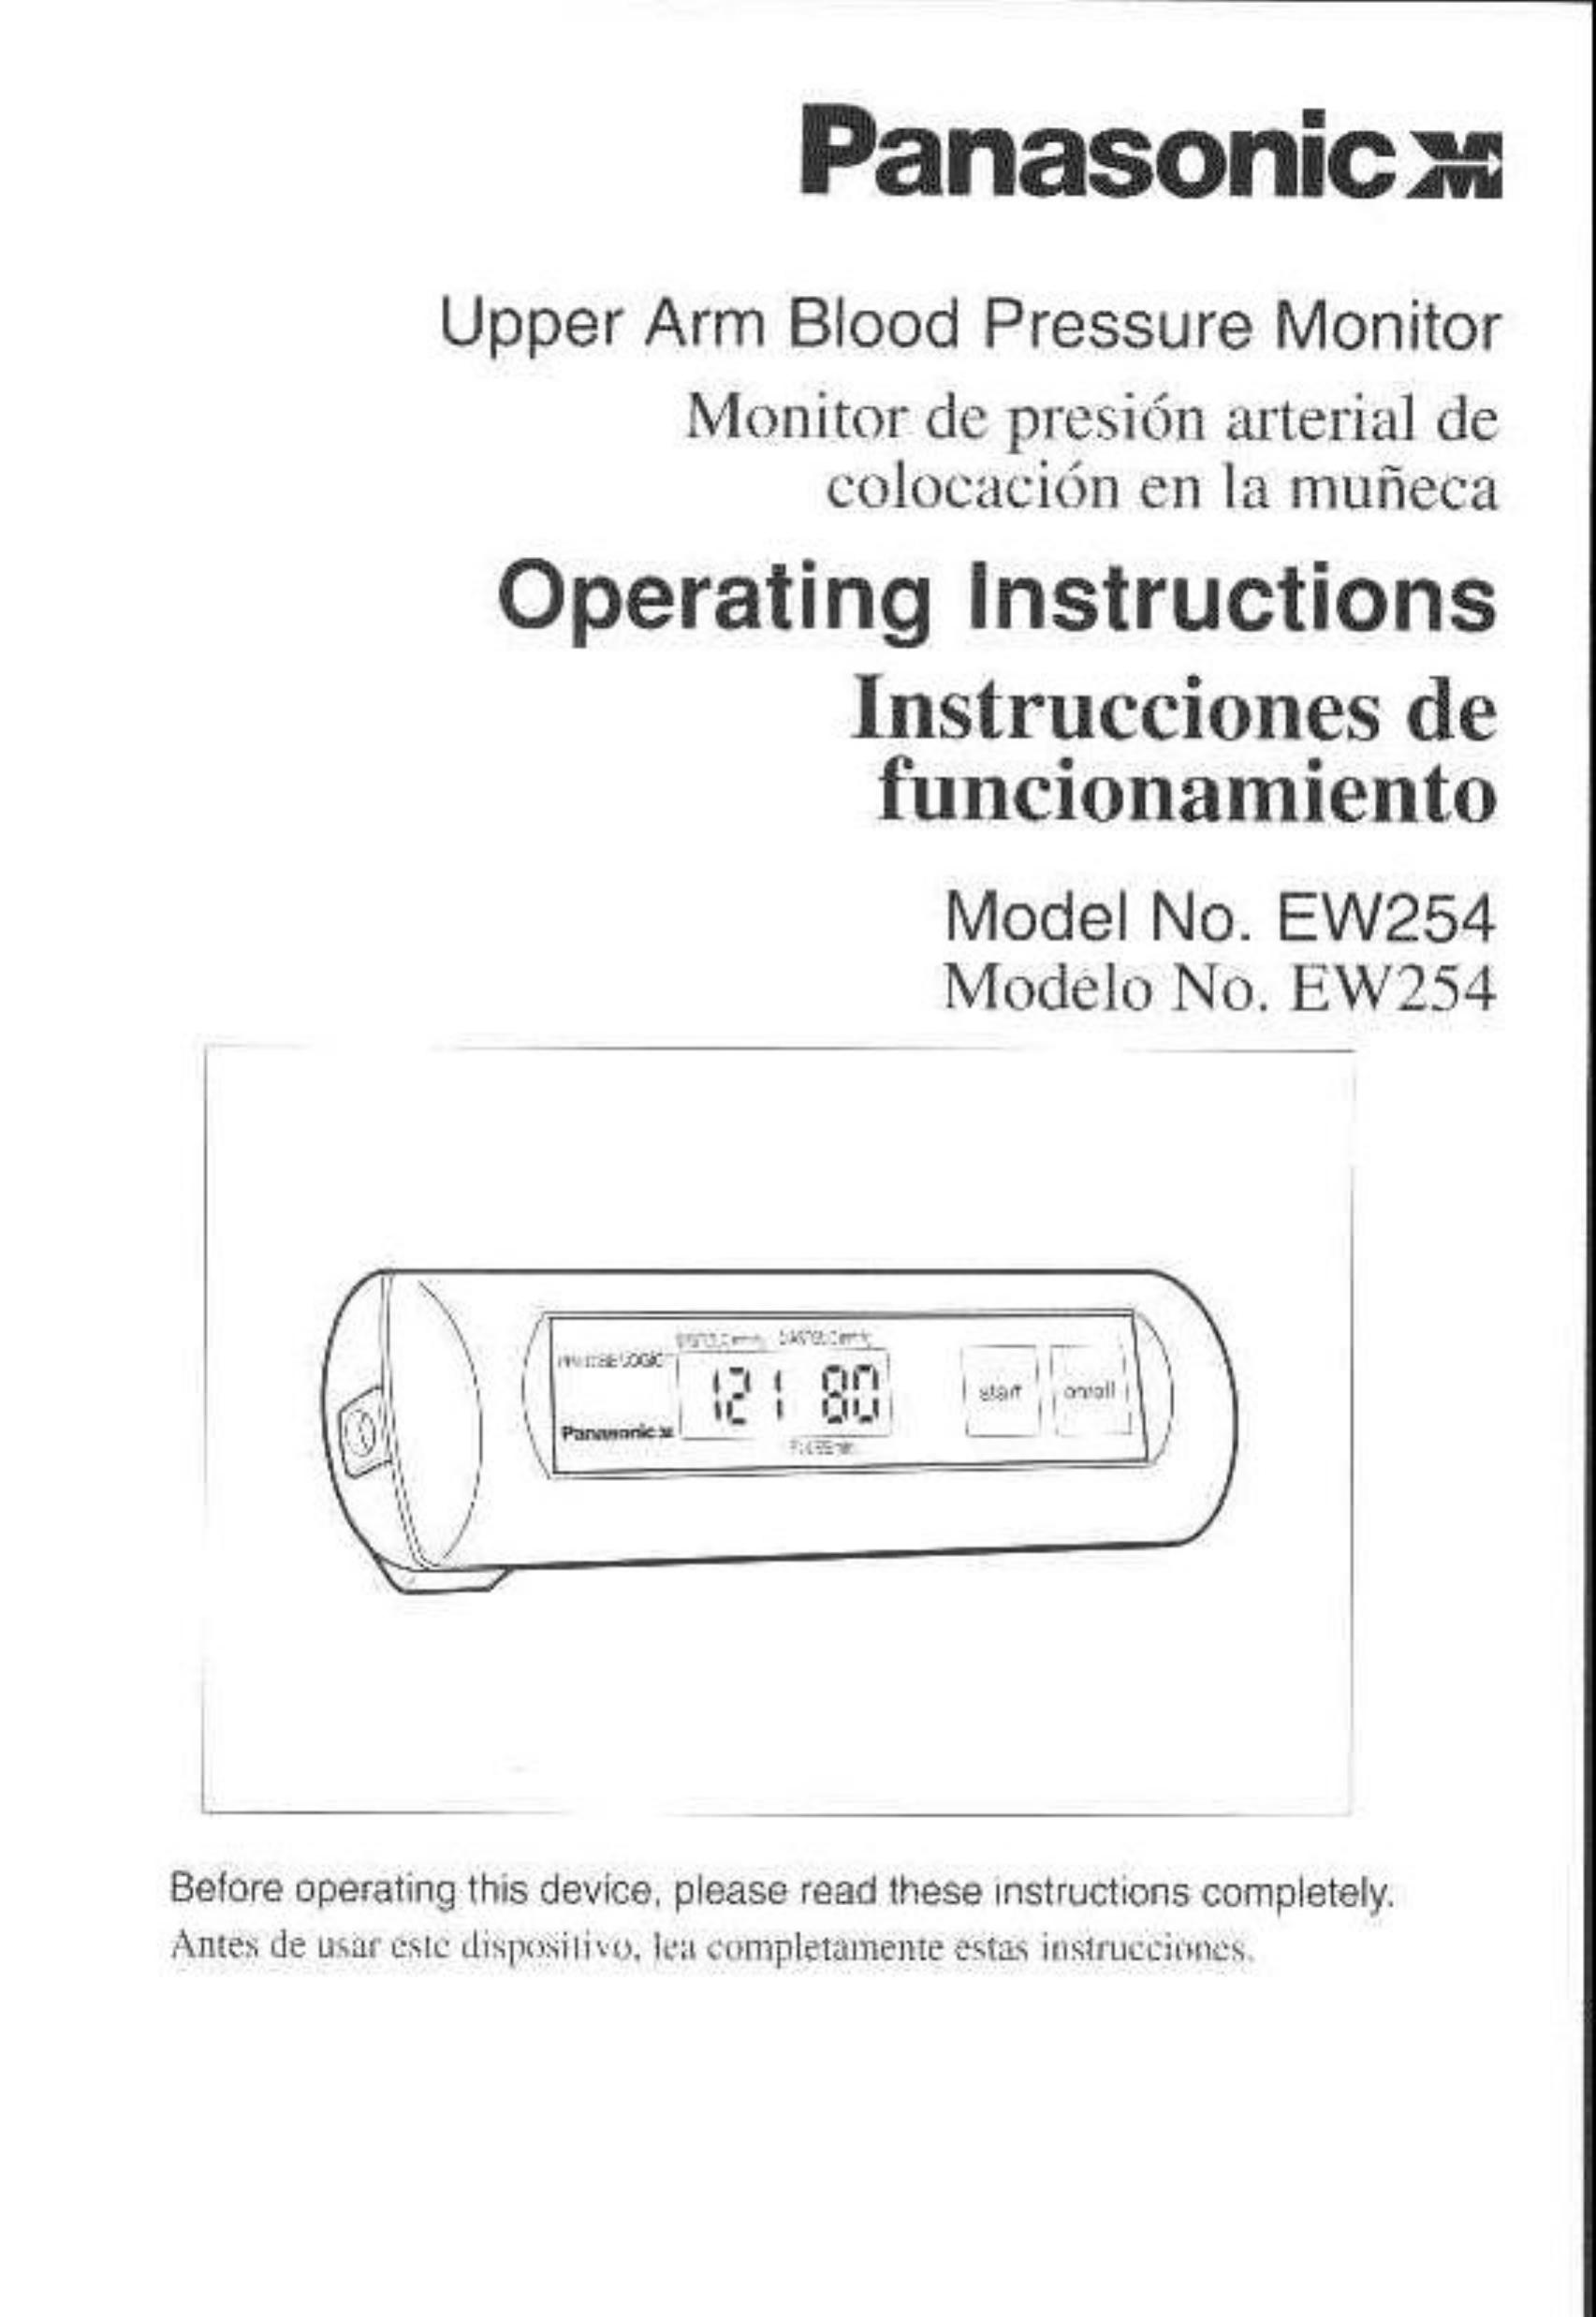 Panasonic EW-254 Blood Pressure Monitor User Manual